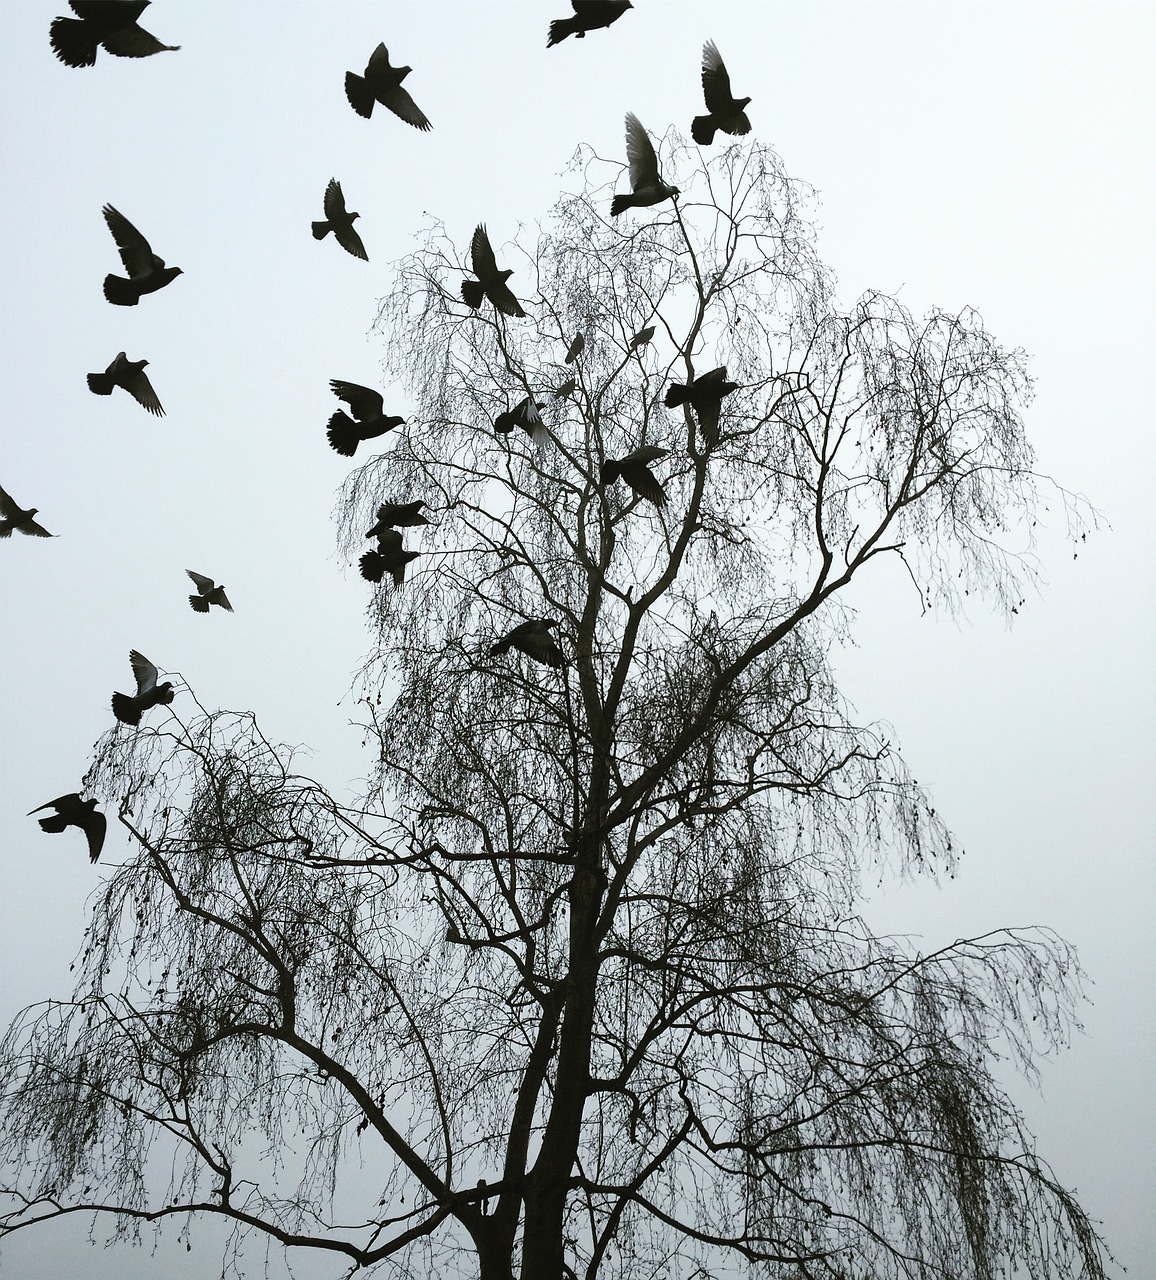 london winter startled pigeons free photo